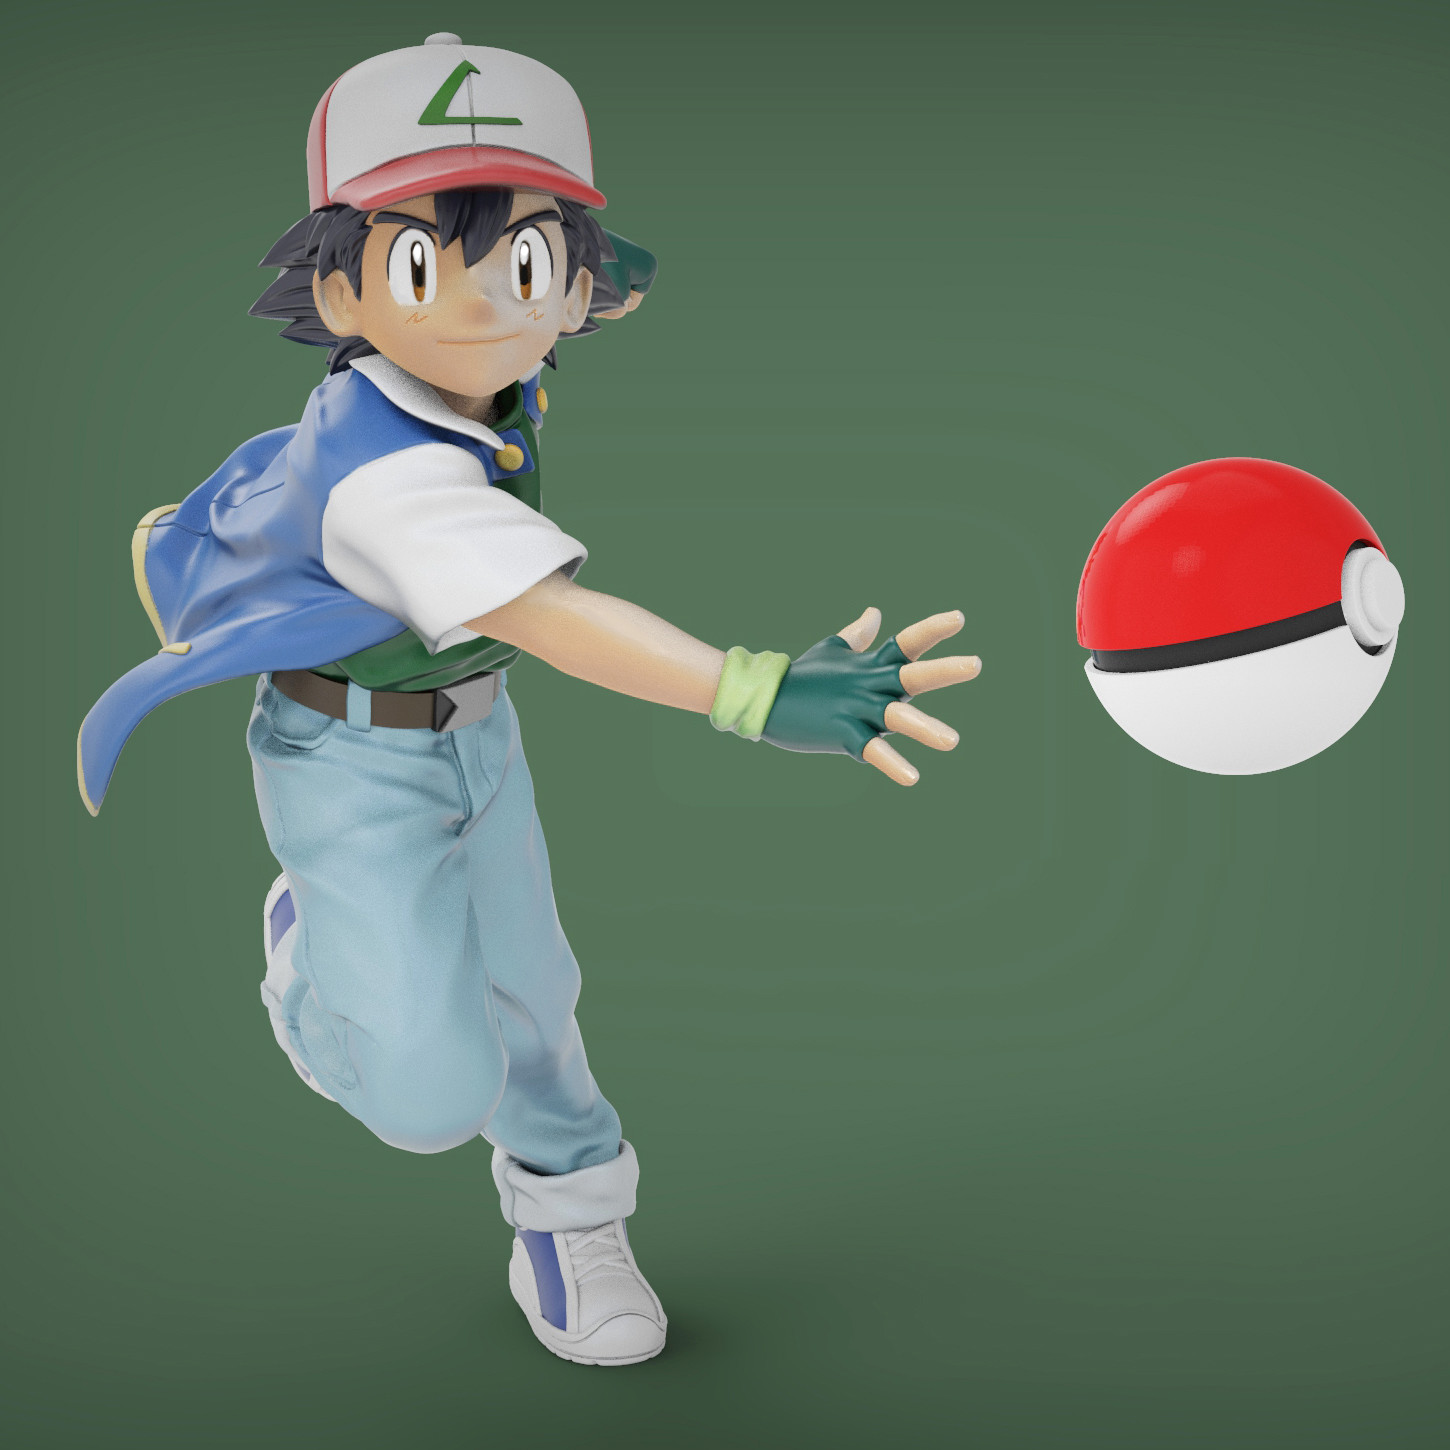 Pokémon-Ash Ketchum fan art.